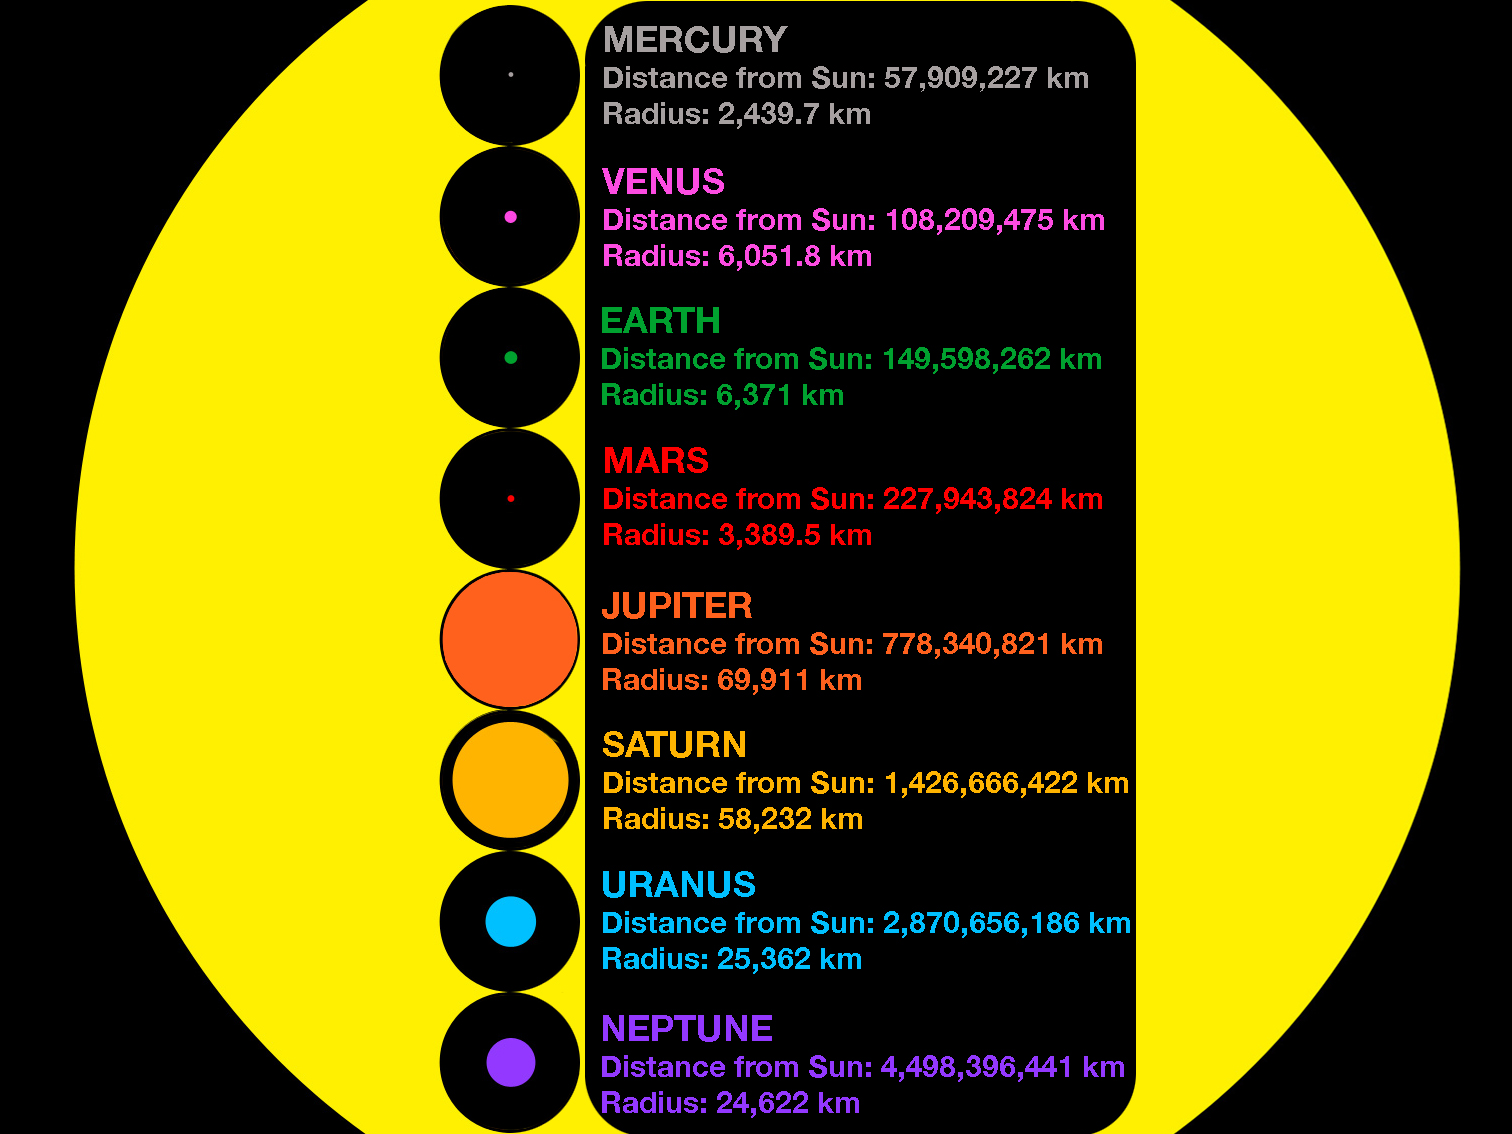 solar system distance activity